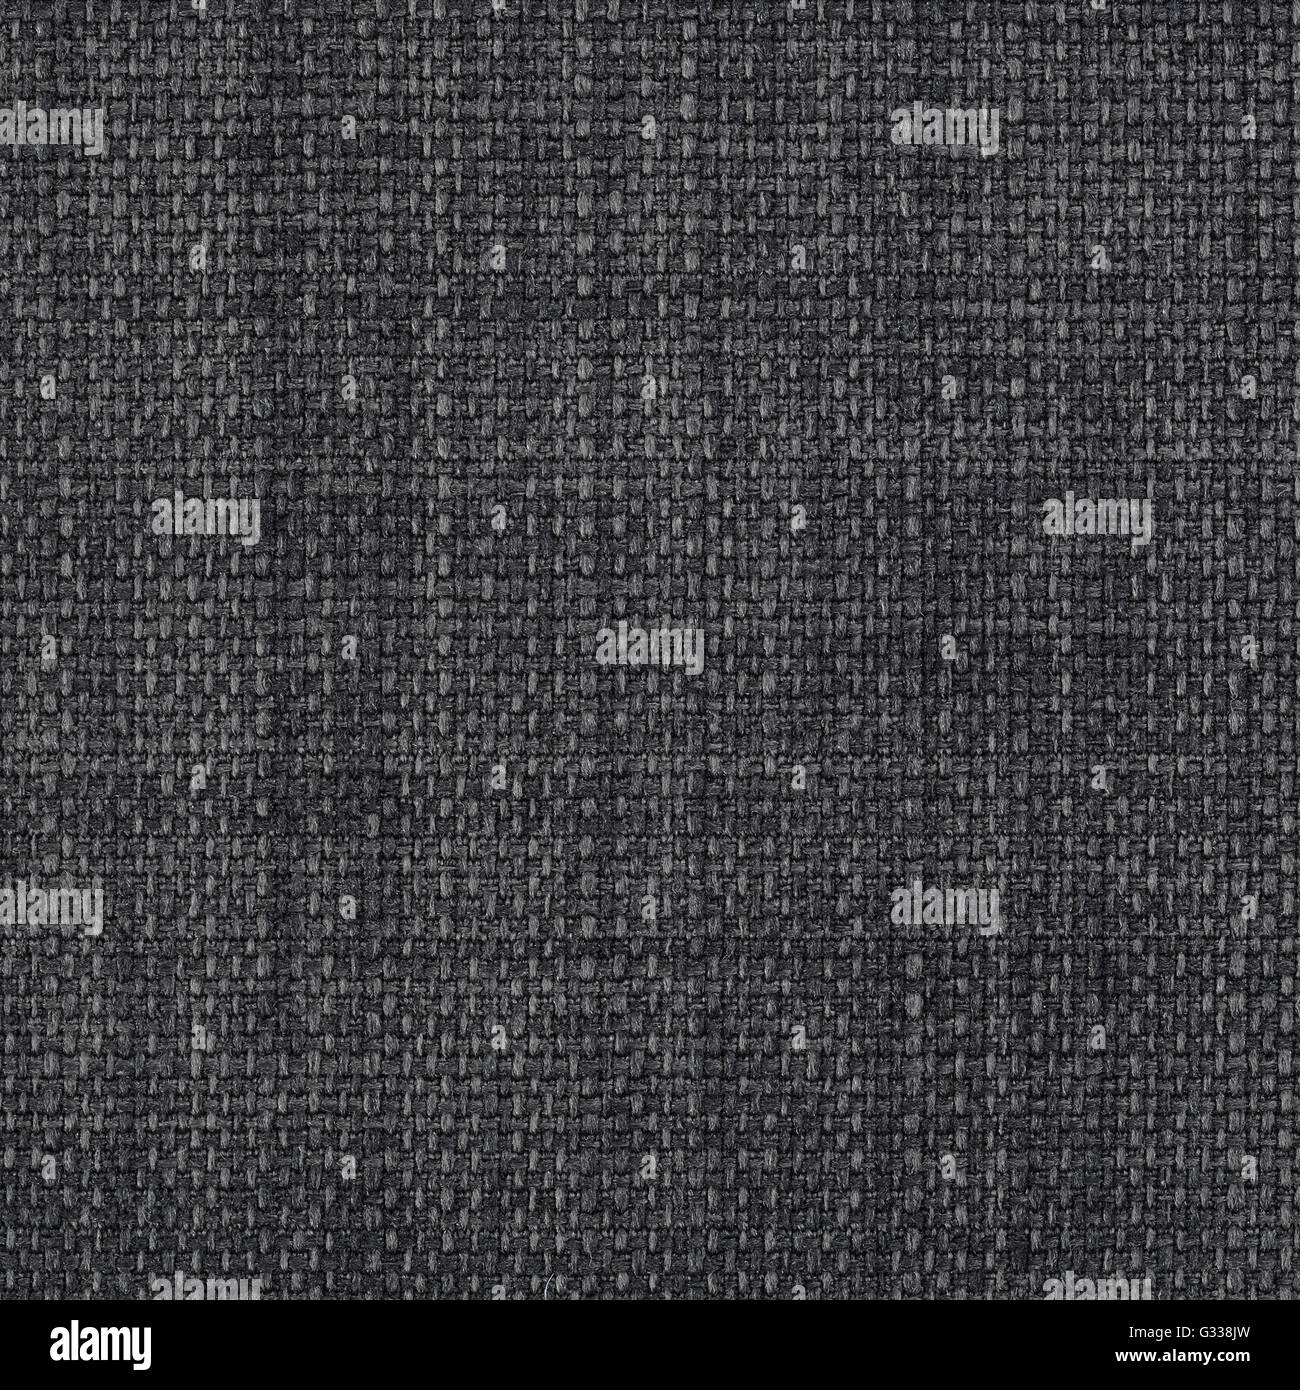 black fabric texture. Close up, top view. Stock Photo